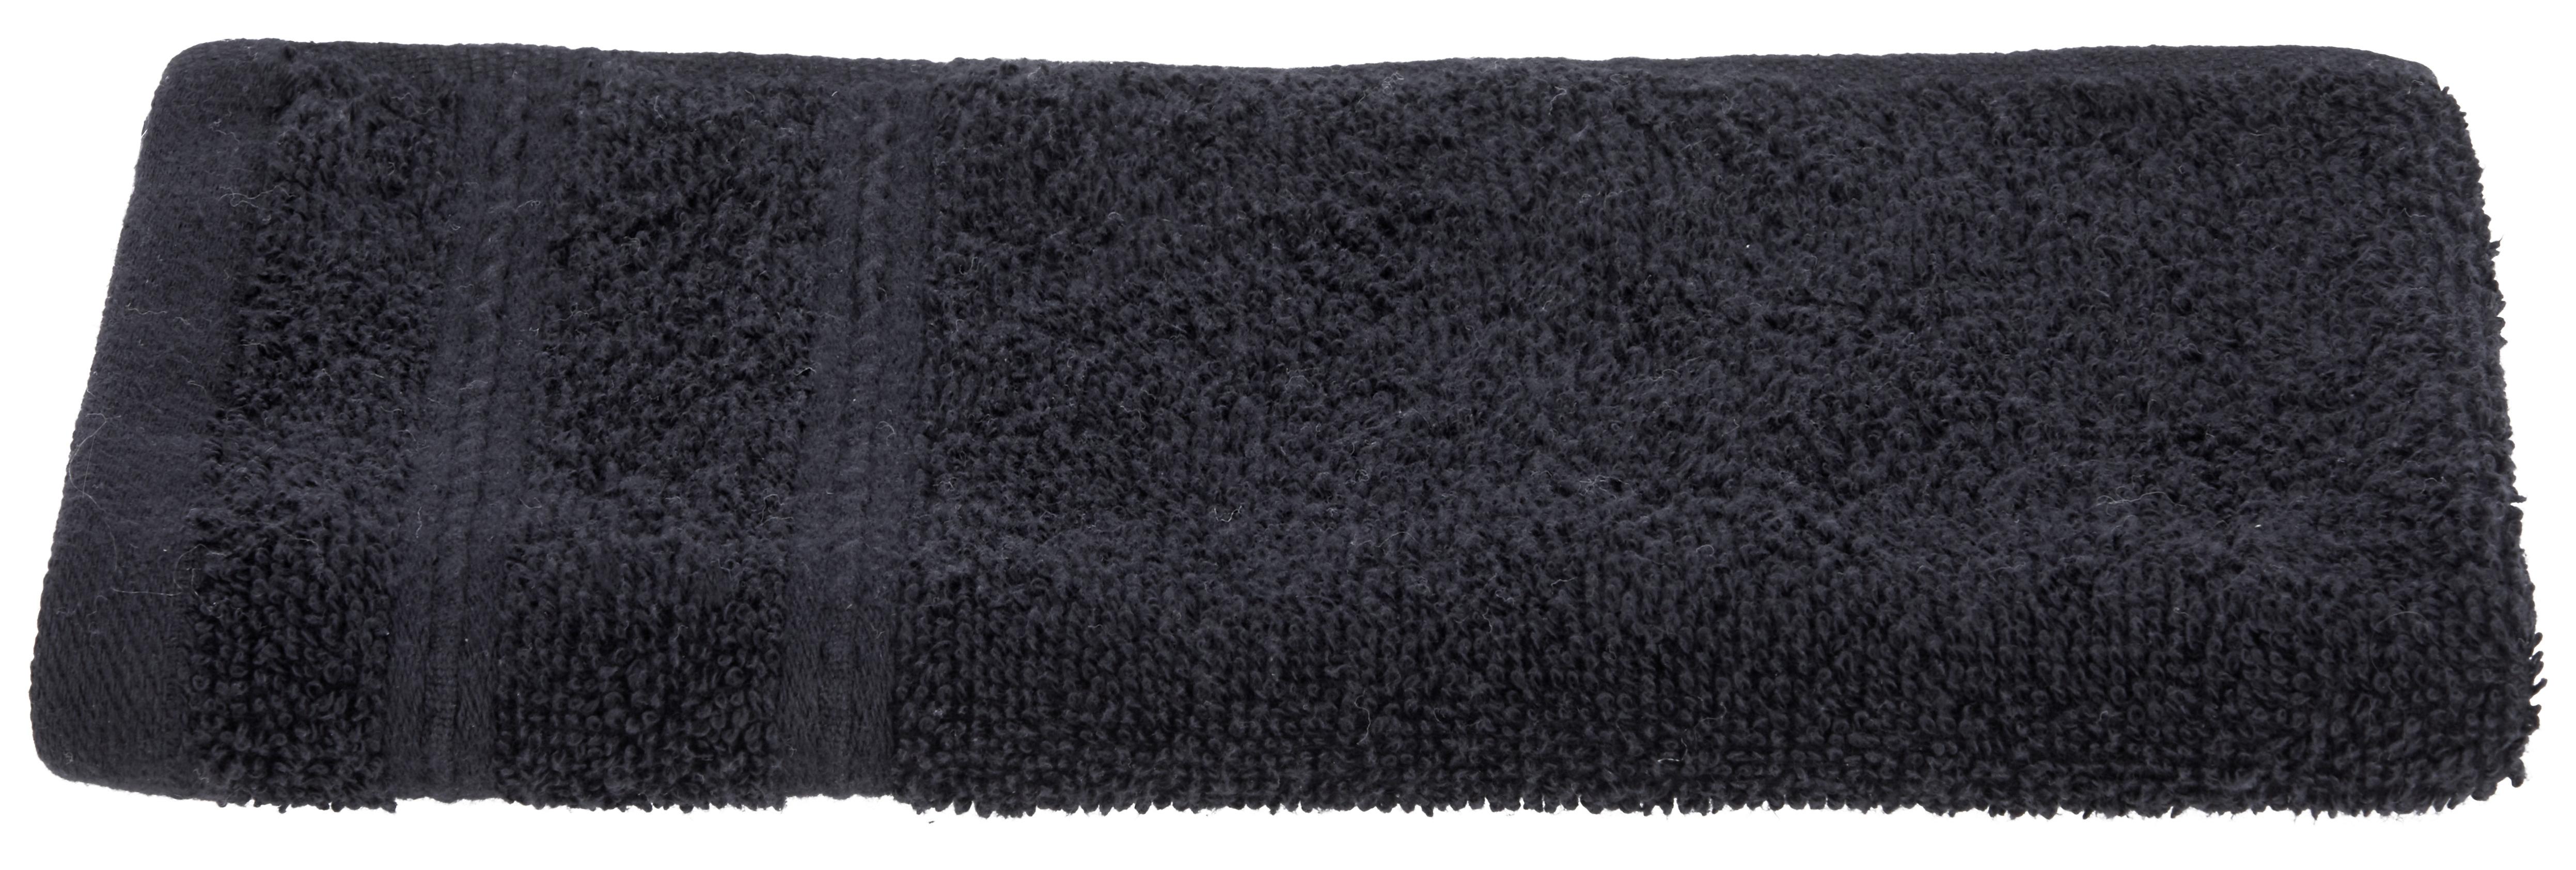 Brisača Melanie -Akt- - črna, tekstil (30/50cm) - Modern Living